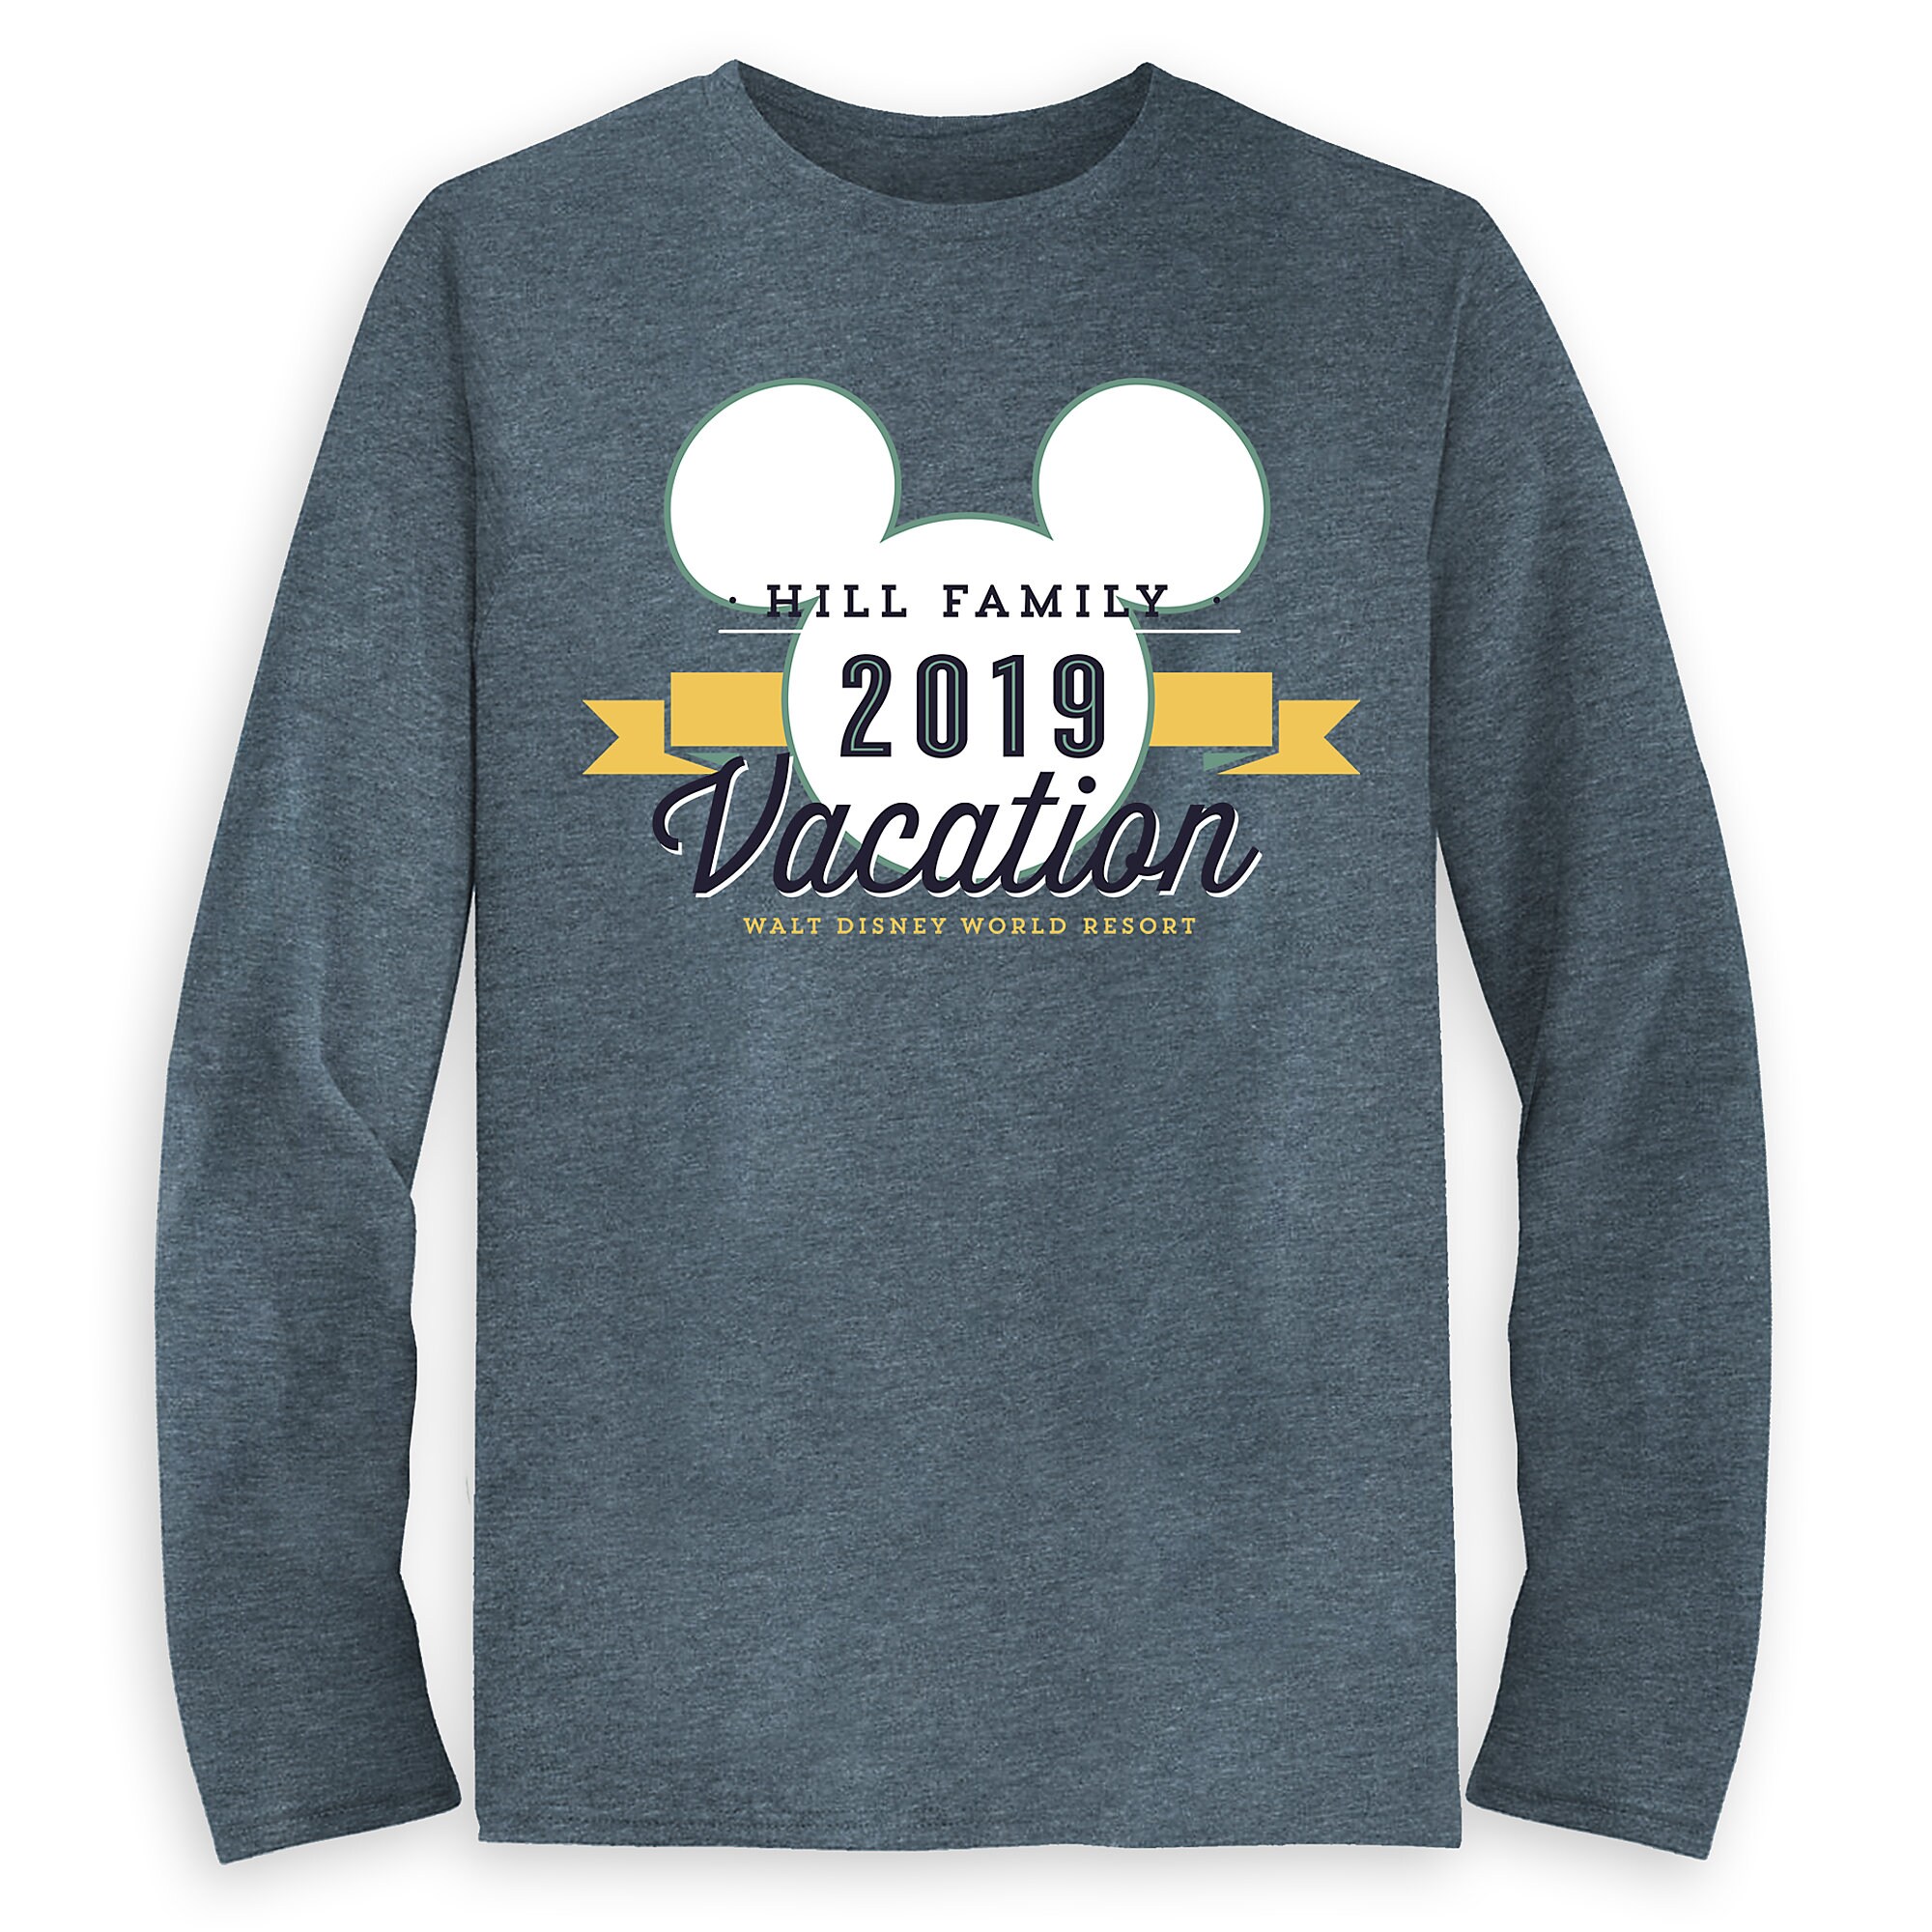 Men's Mickey Mouse Family Vacation Long Sleeve Shirt - Walt Disney World Resort - 2019 - Customized